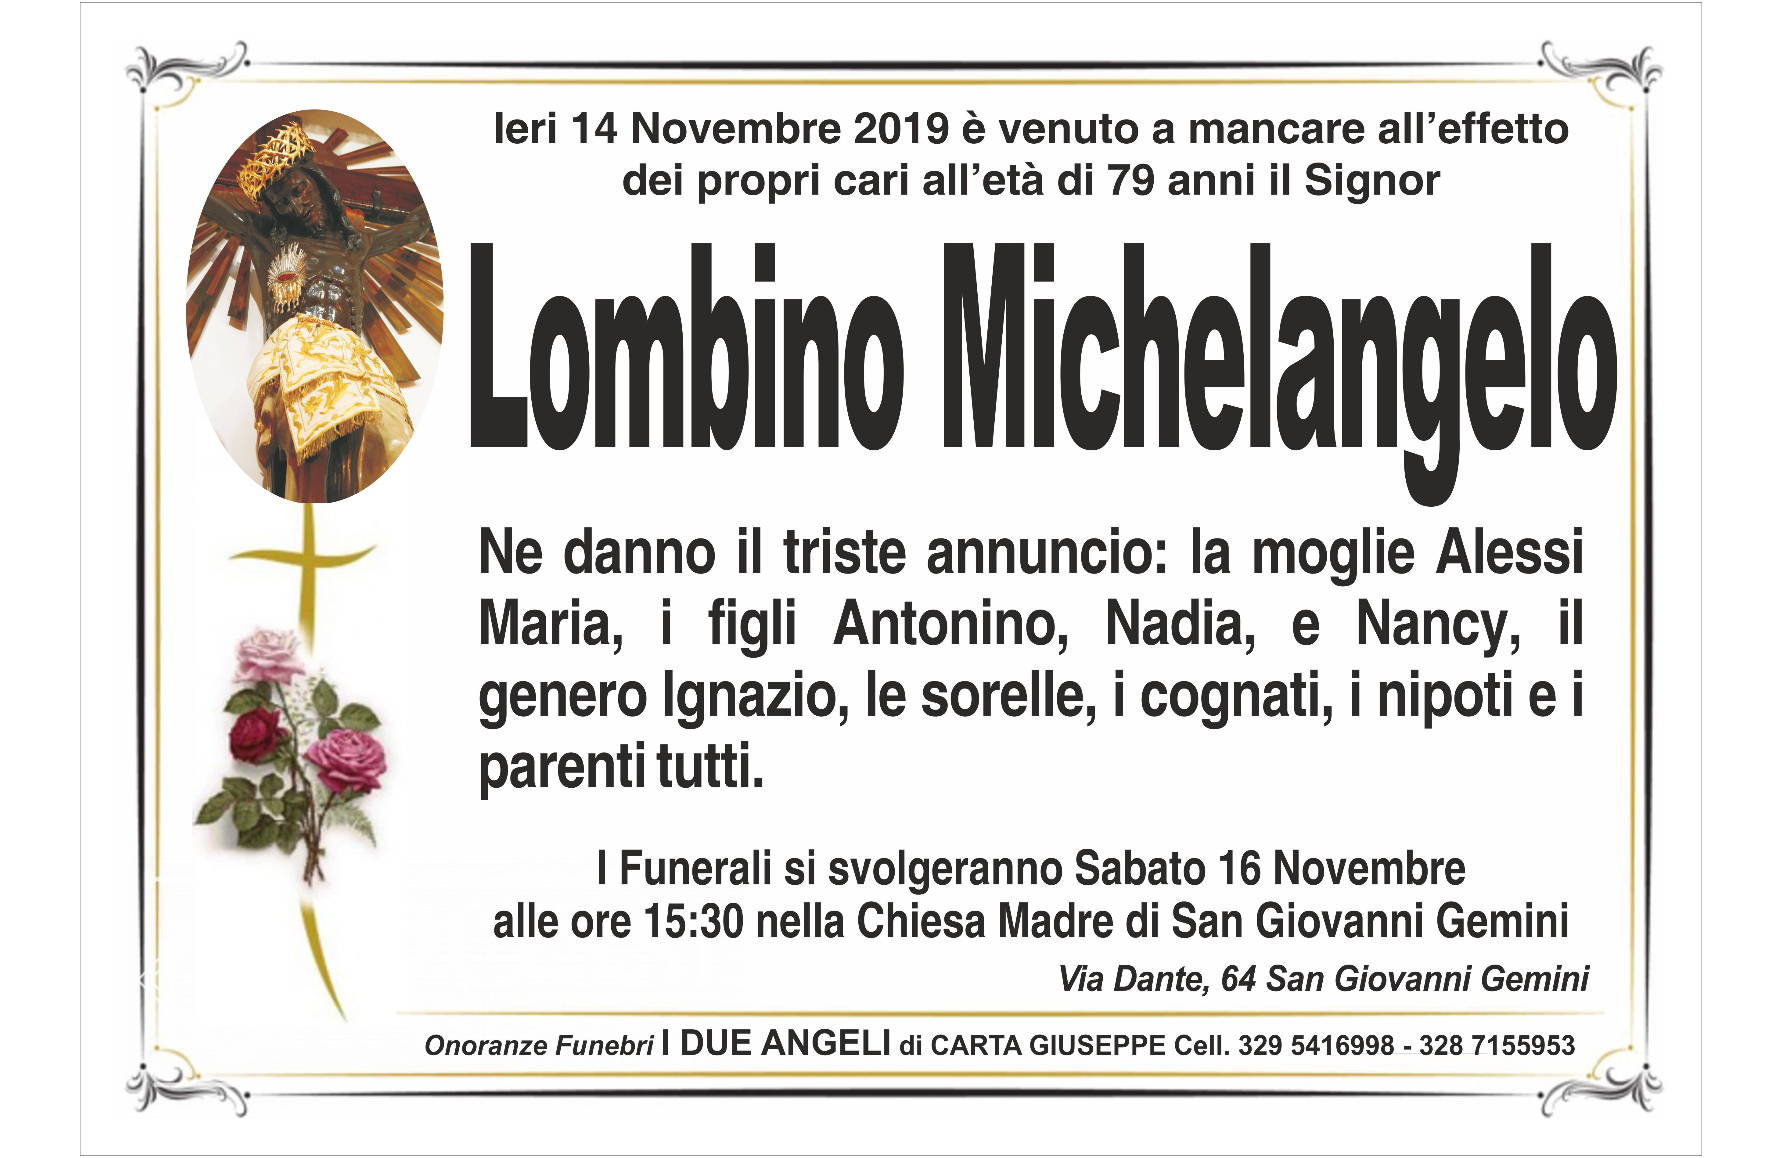 Michelangelo Lombino